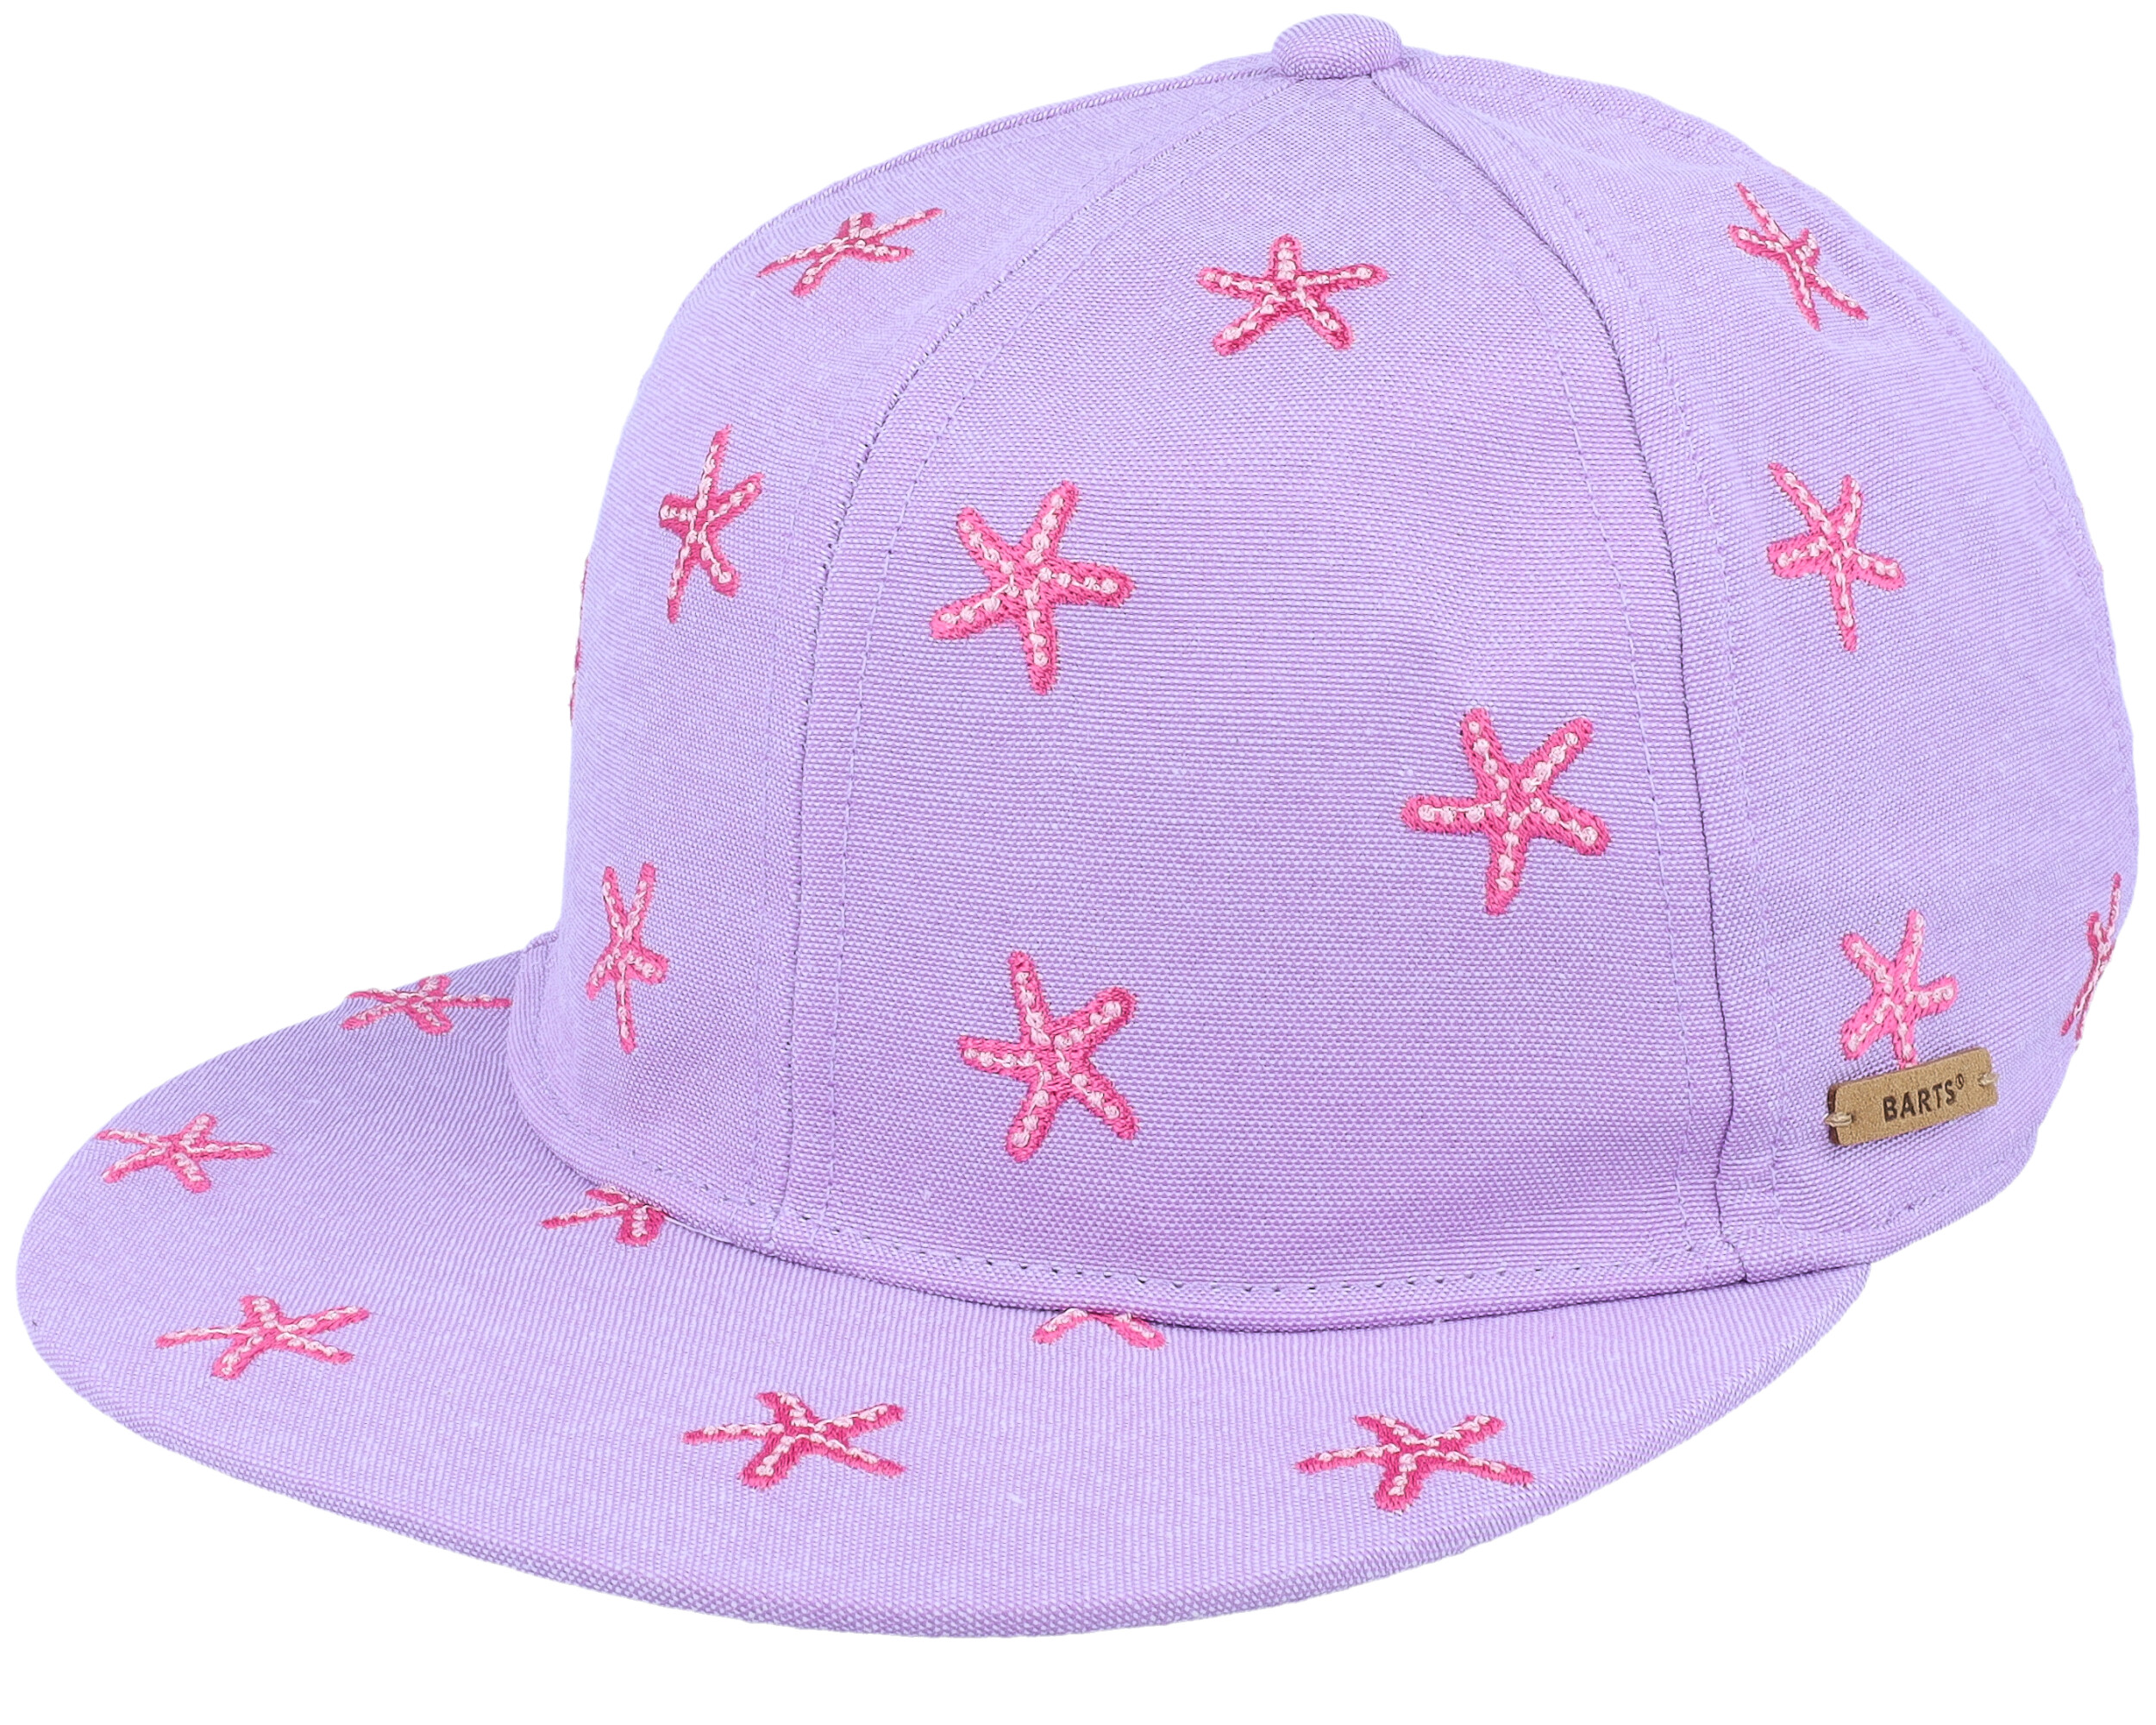 Kids Pauk Barts Strapback Purple cap Cap 